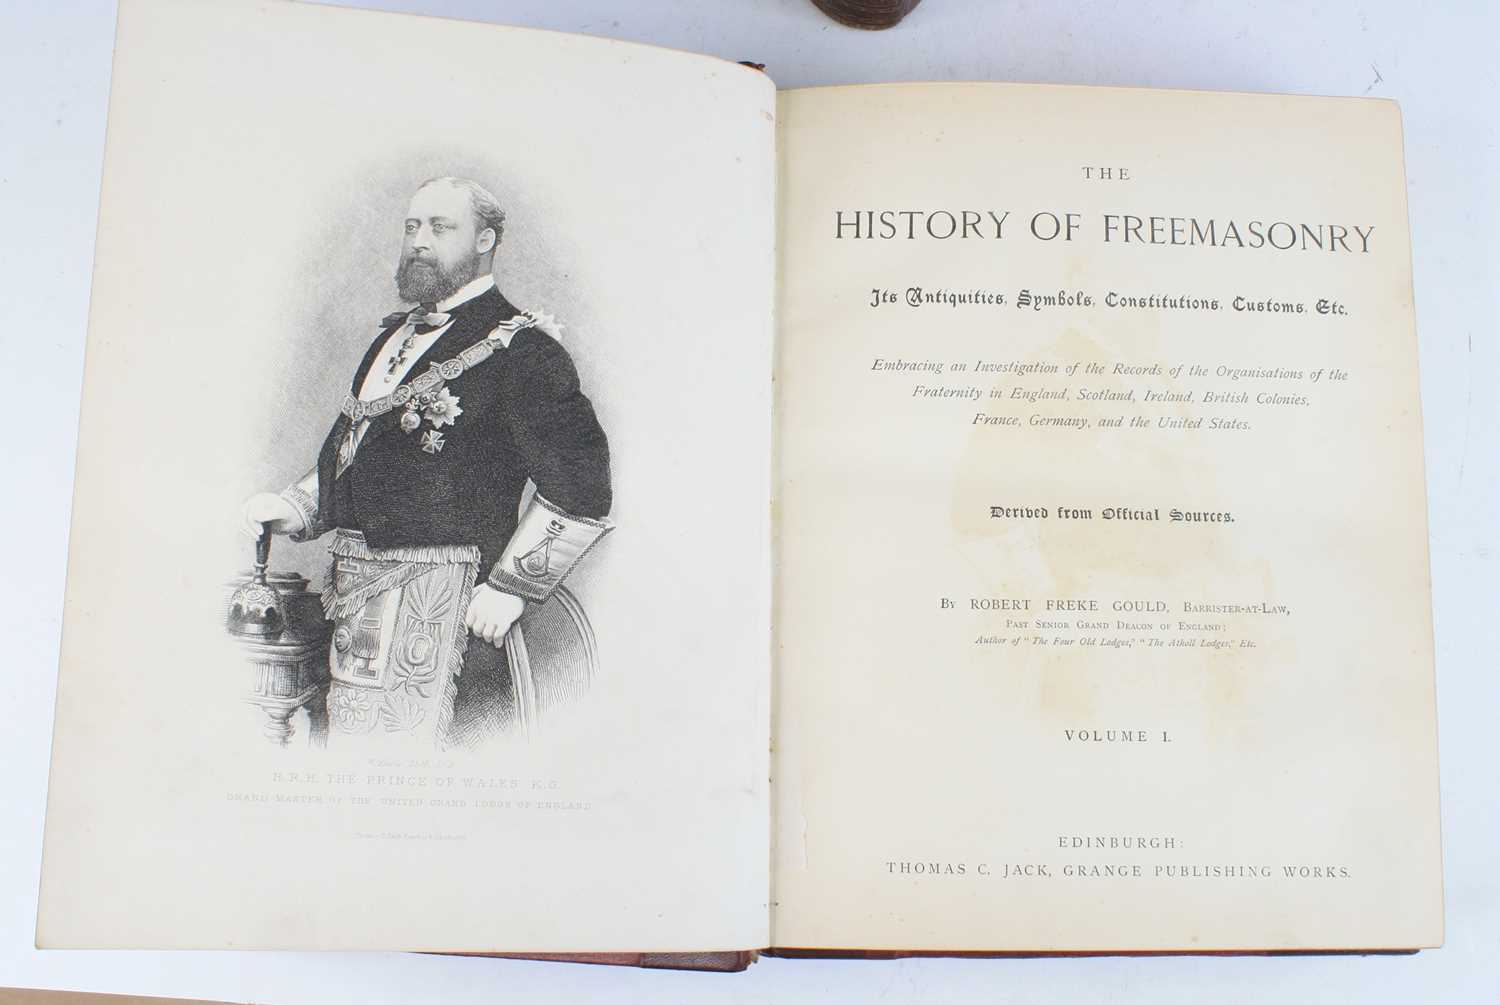 Gould, Robert Freke: The History of Freemasonry its Antiquities, Symbols, Constitutions, Customs - Image 3 of 3